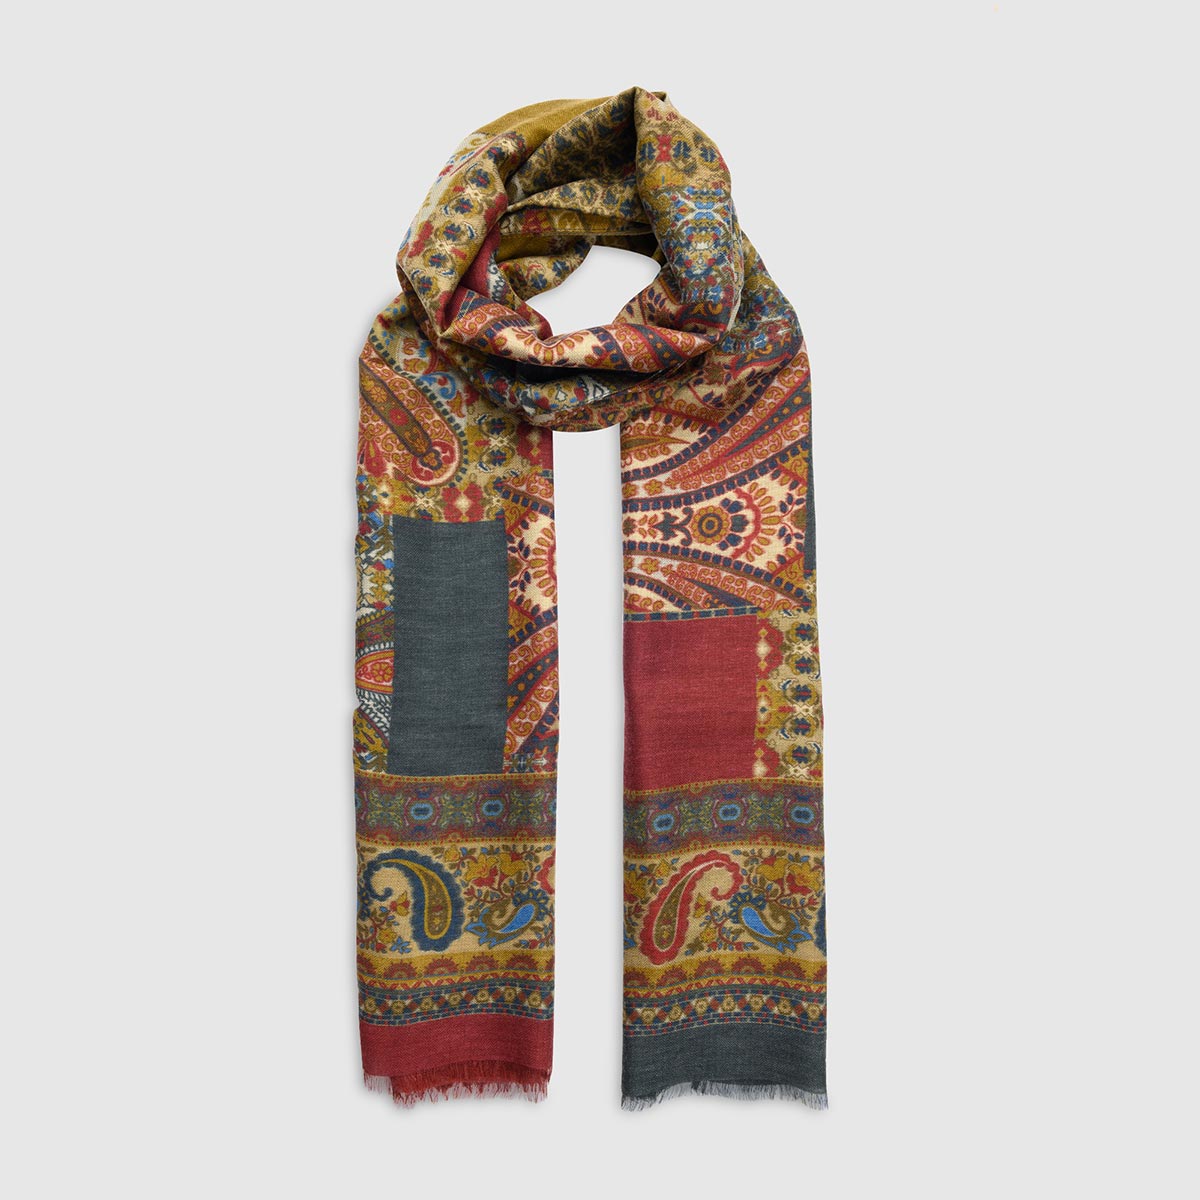 Wool-Silk scarf with Kashmir pattern